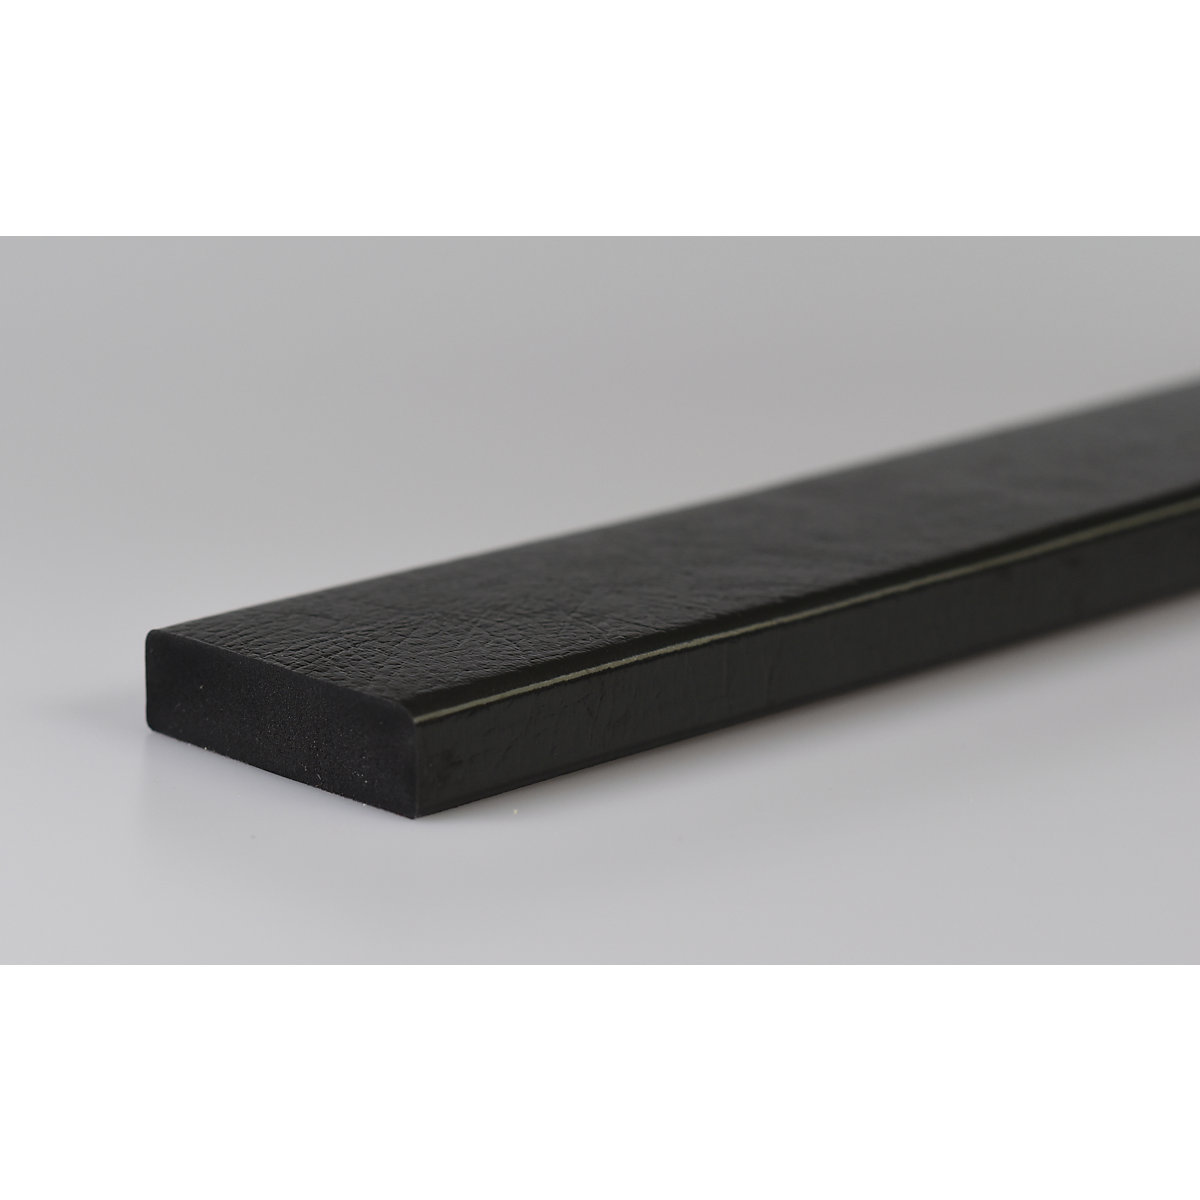 Knuffi®-oppervlaktebescherming – SHG, type S, stuk van 1 m, zwart-29